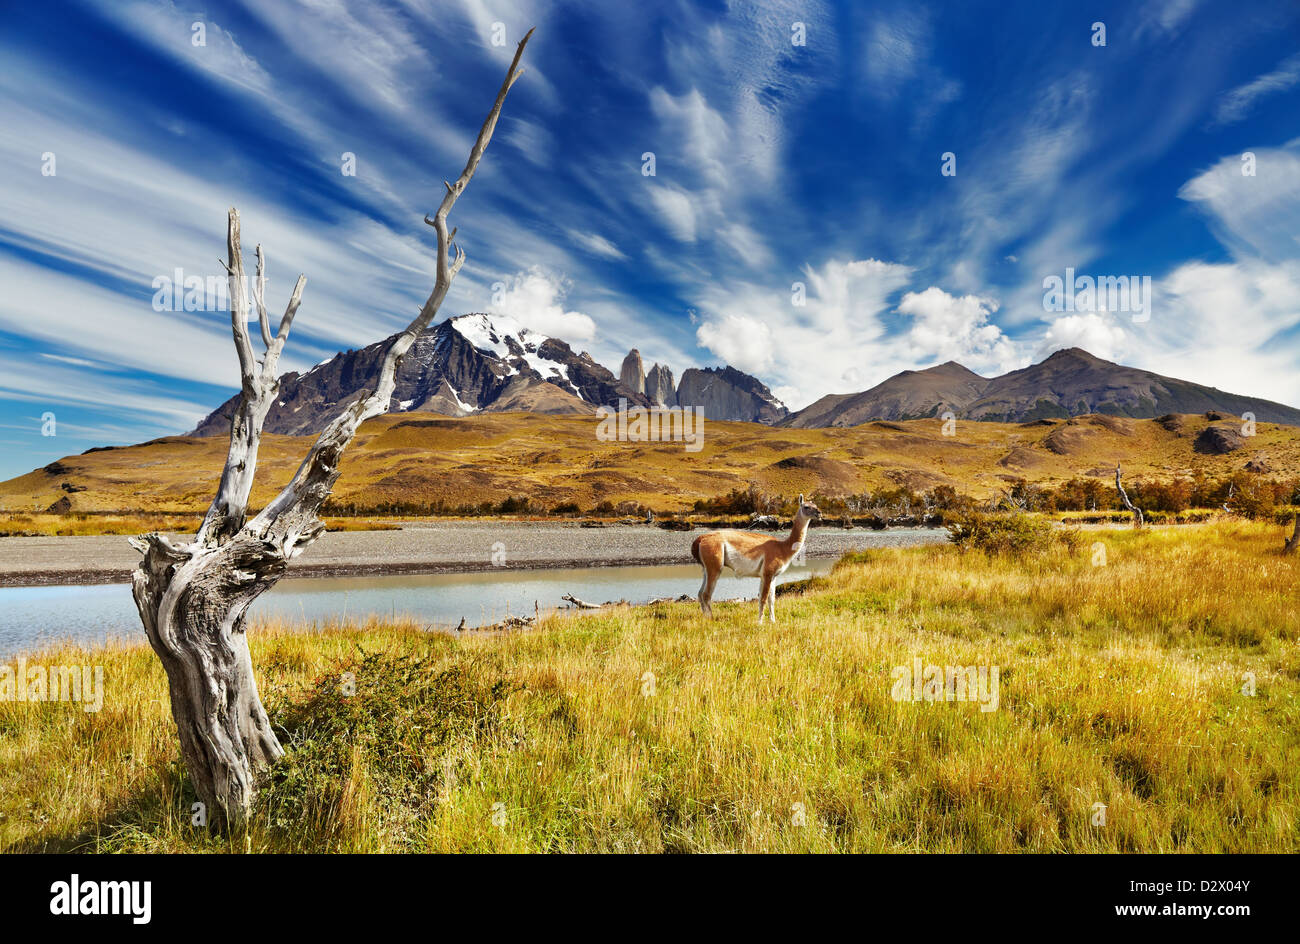 Parco Nazionale di Torres del Paine, Patagonia, Cile Foto Stock